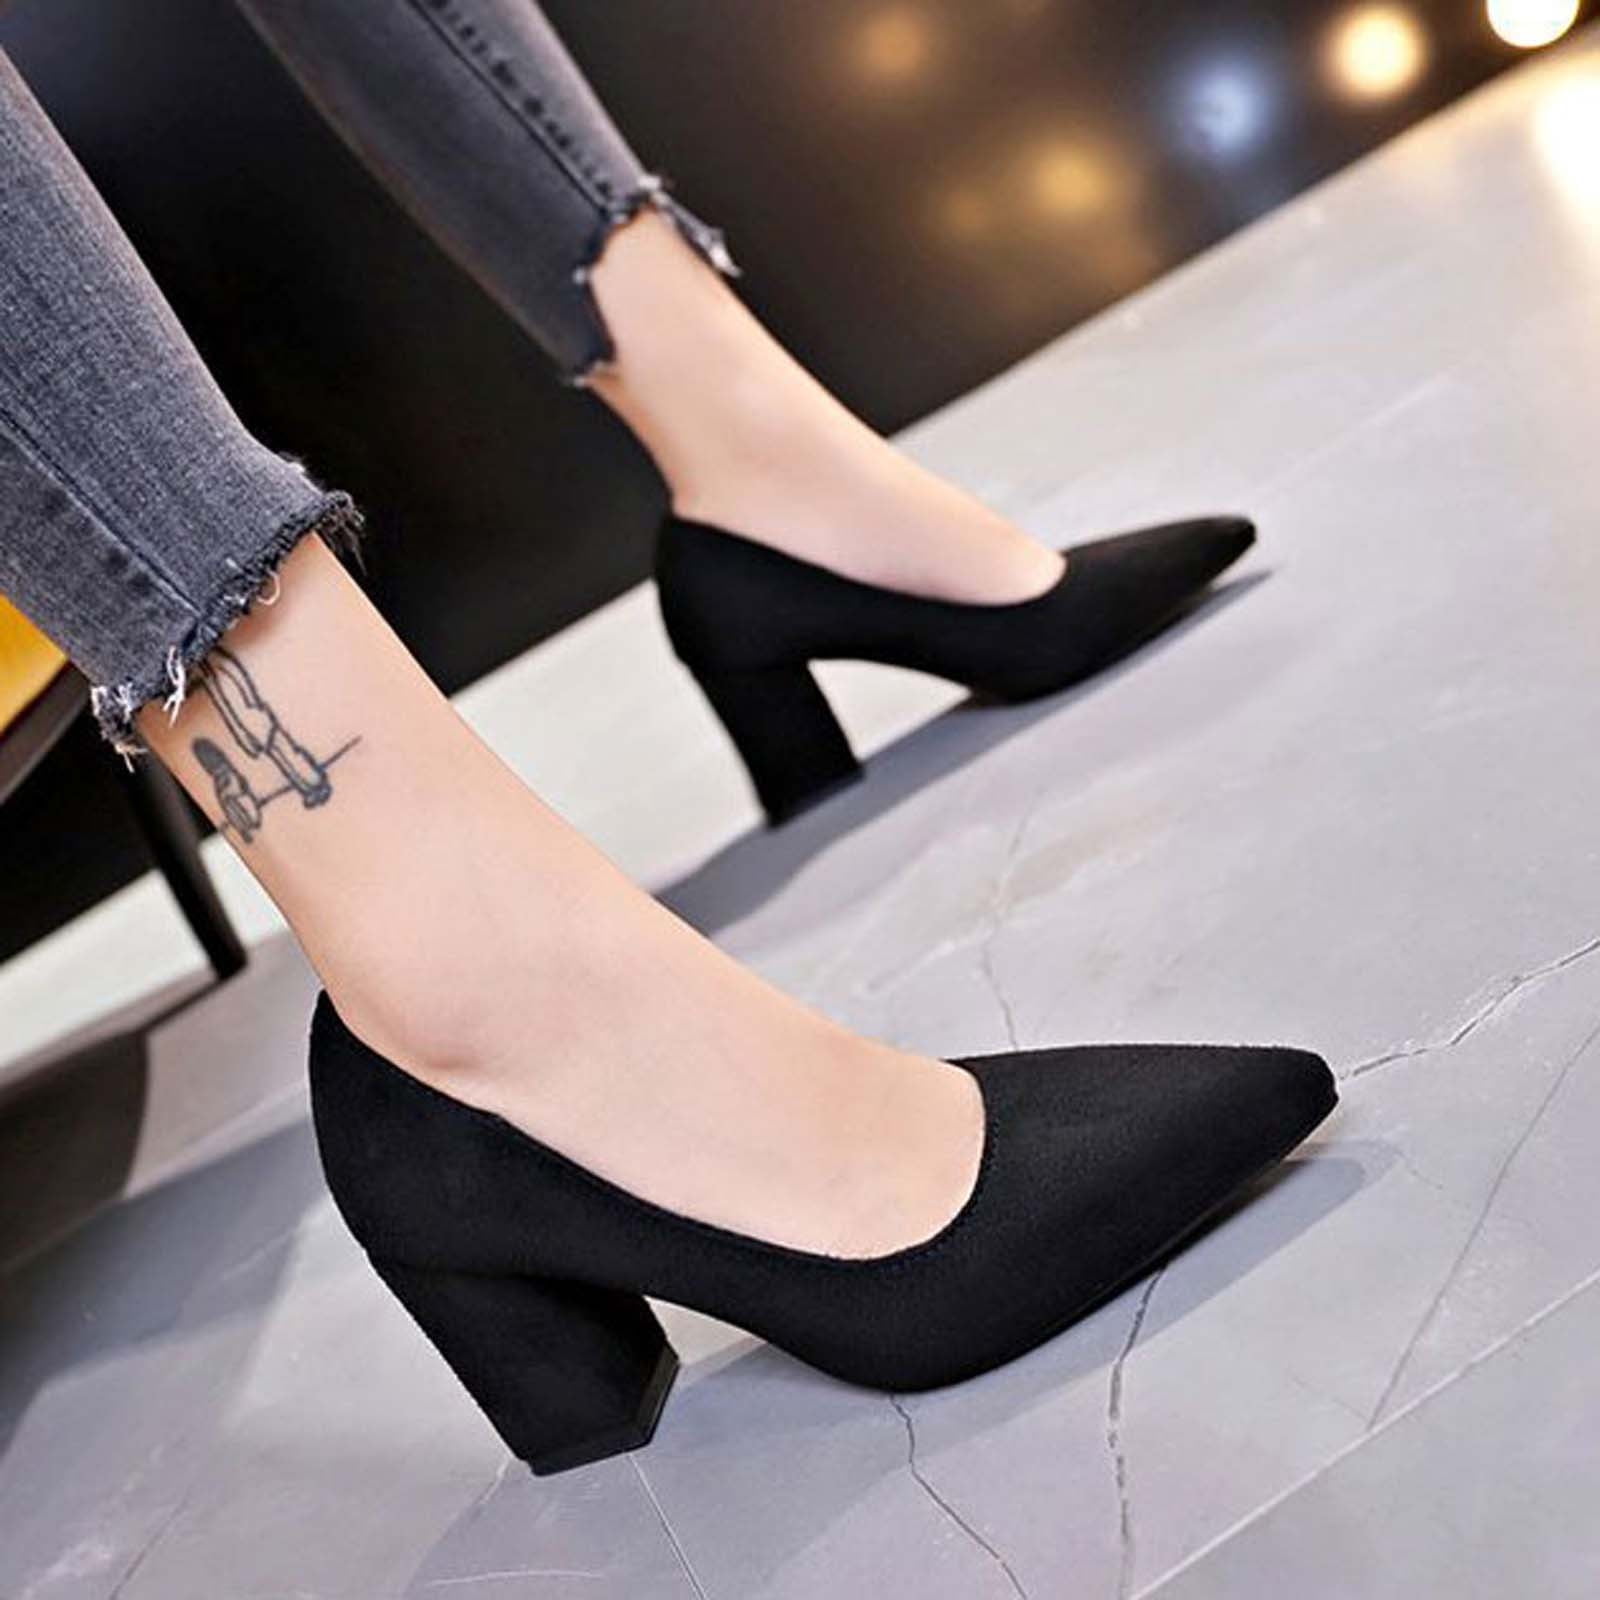 So Chic Pointed Toe Block Heels | Small heel shoes, Heels, Cute shoes heels